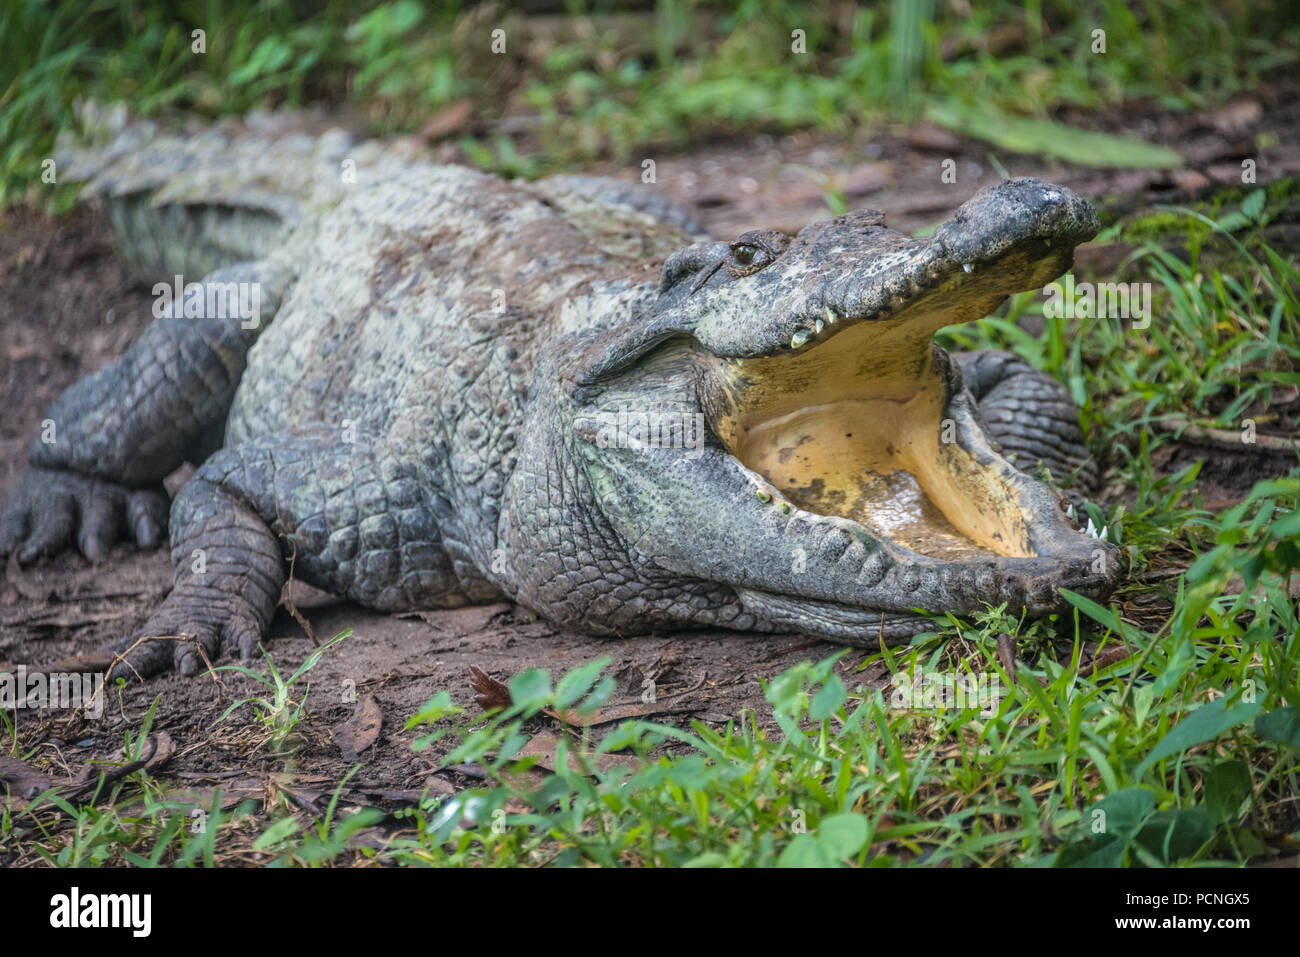 Siamese crocodile at St. Augustine Alligator Farm in St. Augustine, Florida. (USA) Stock Photo